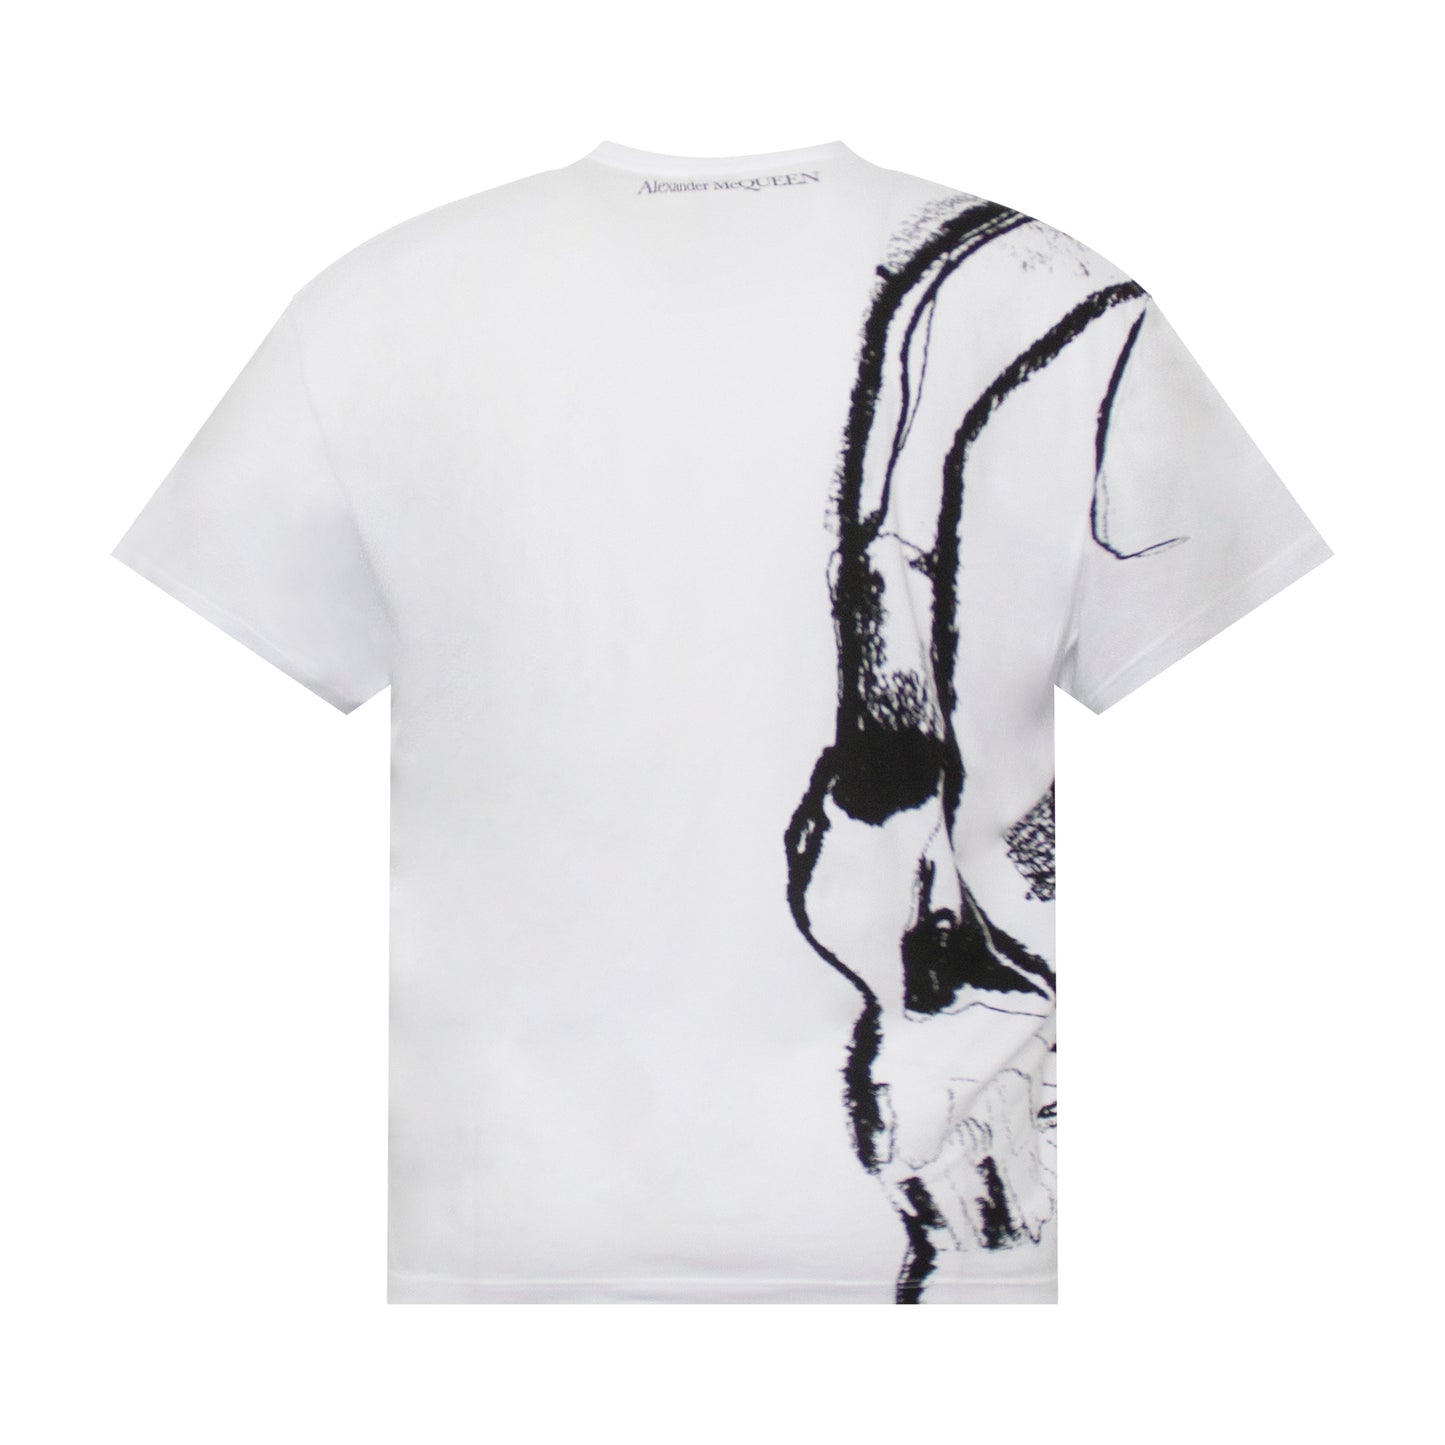 Big Skull Print T-Shirt in White